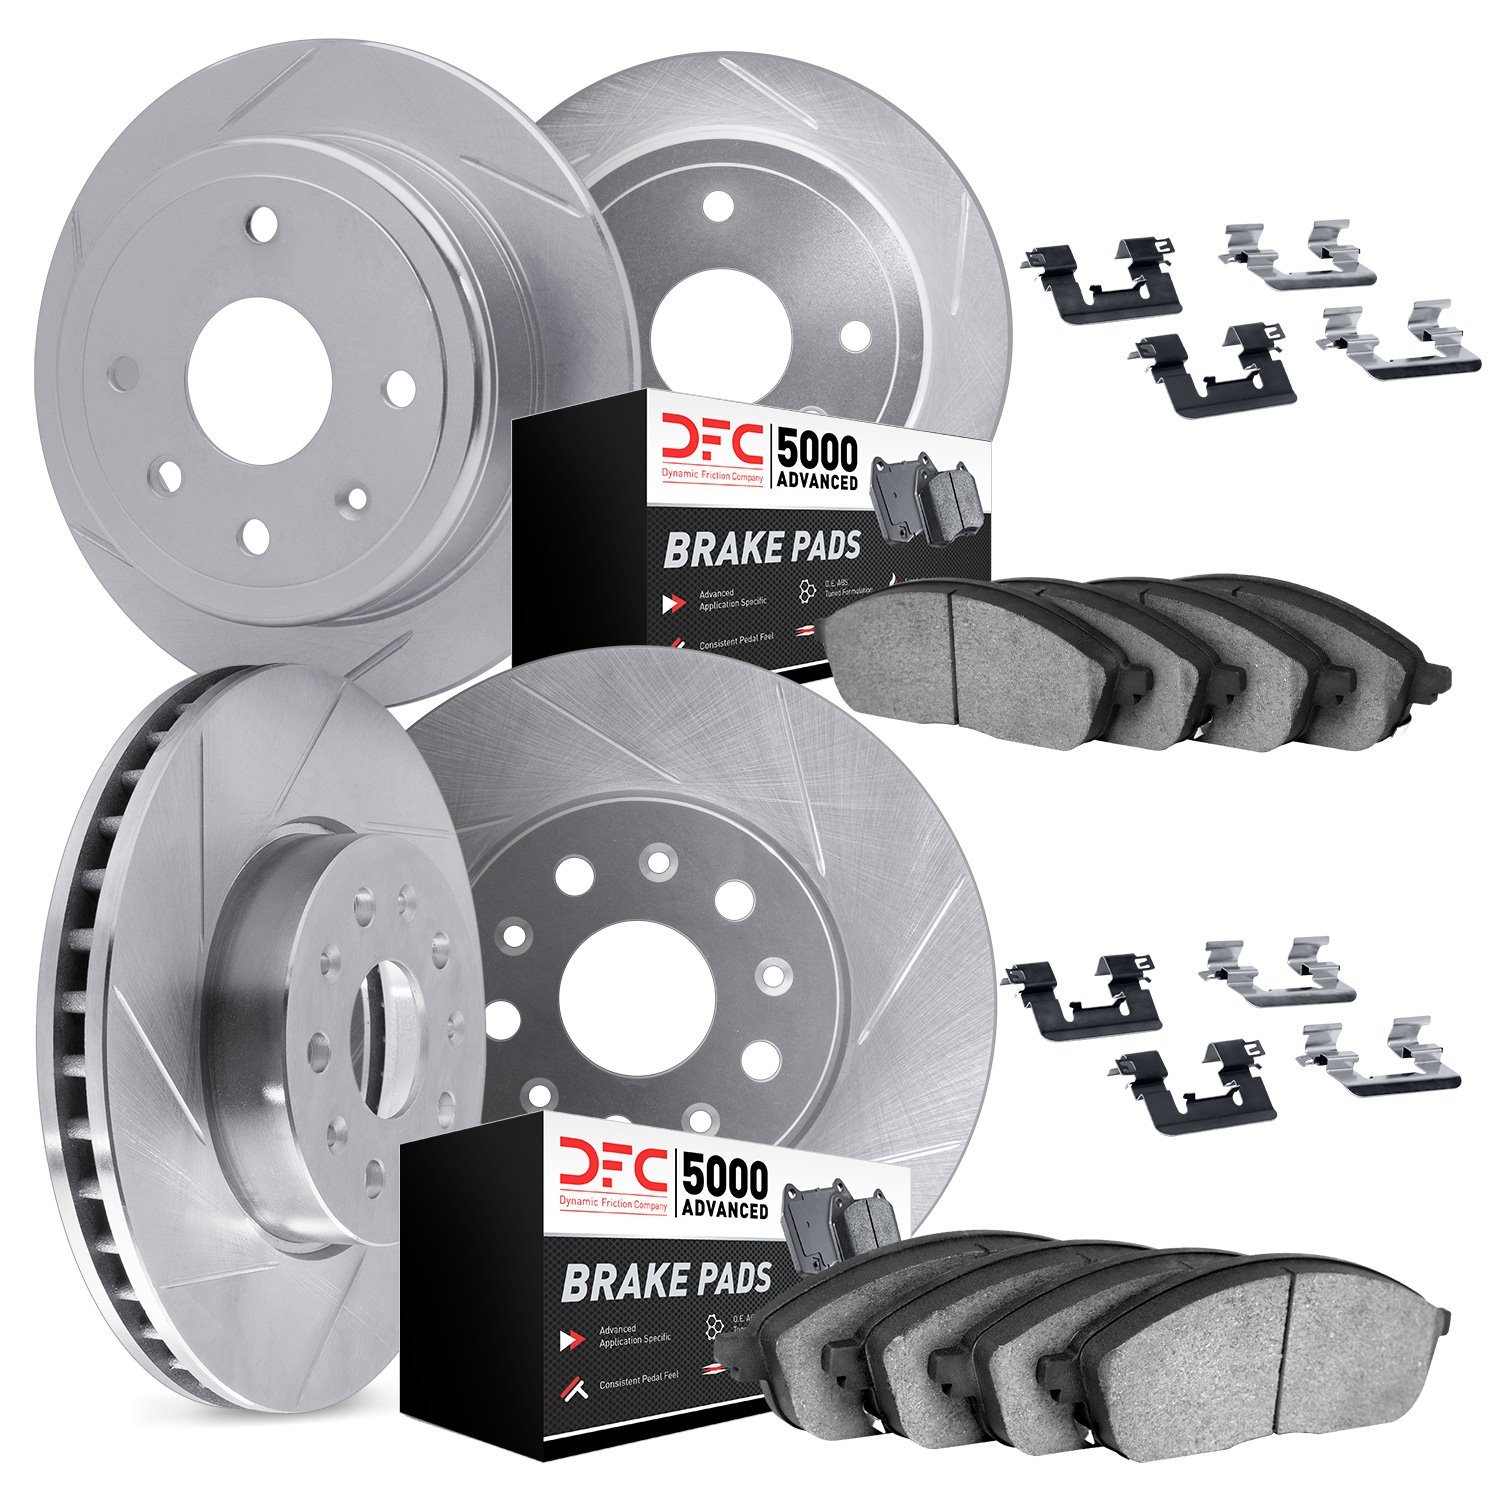 5514-11014 Slotted Brake Rotors w/5000 Advanced Brake Pads Kit & Hardware [Silver], 2015-2019 Multiple Makes/Models, Position: F